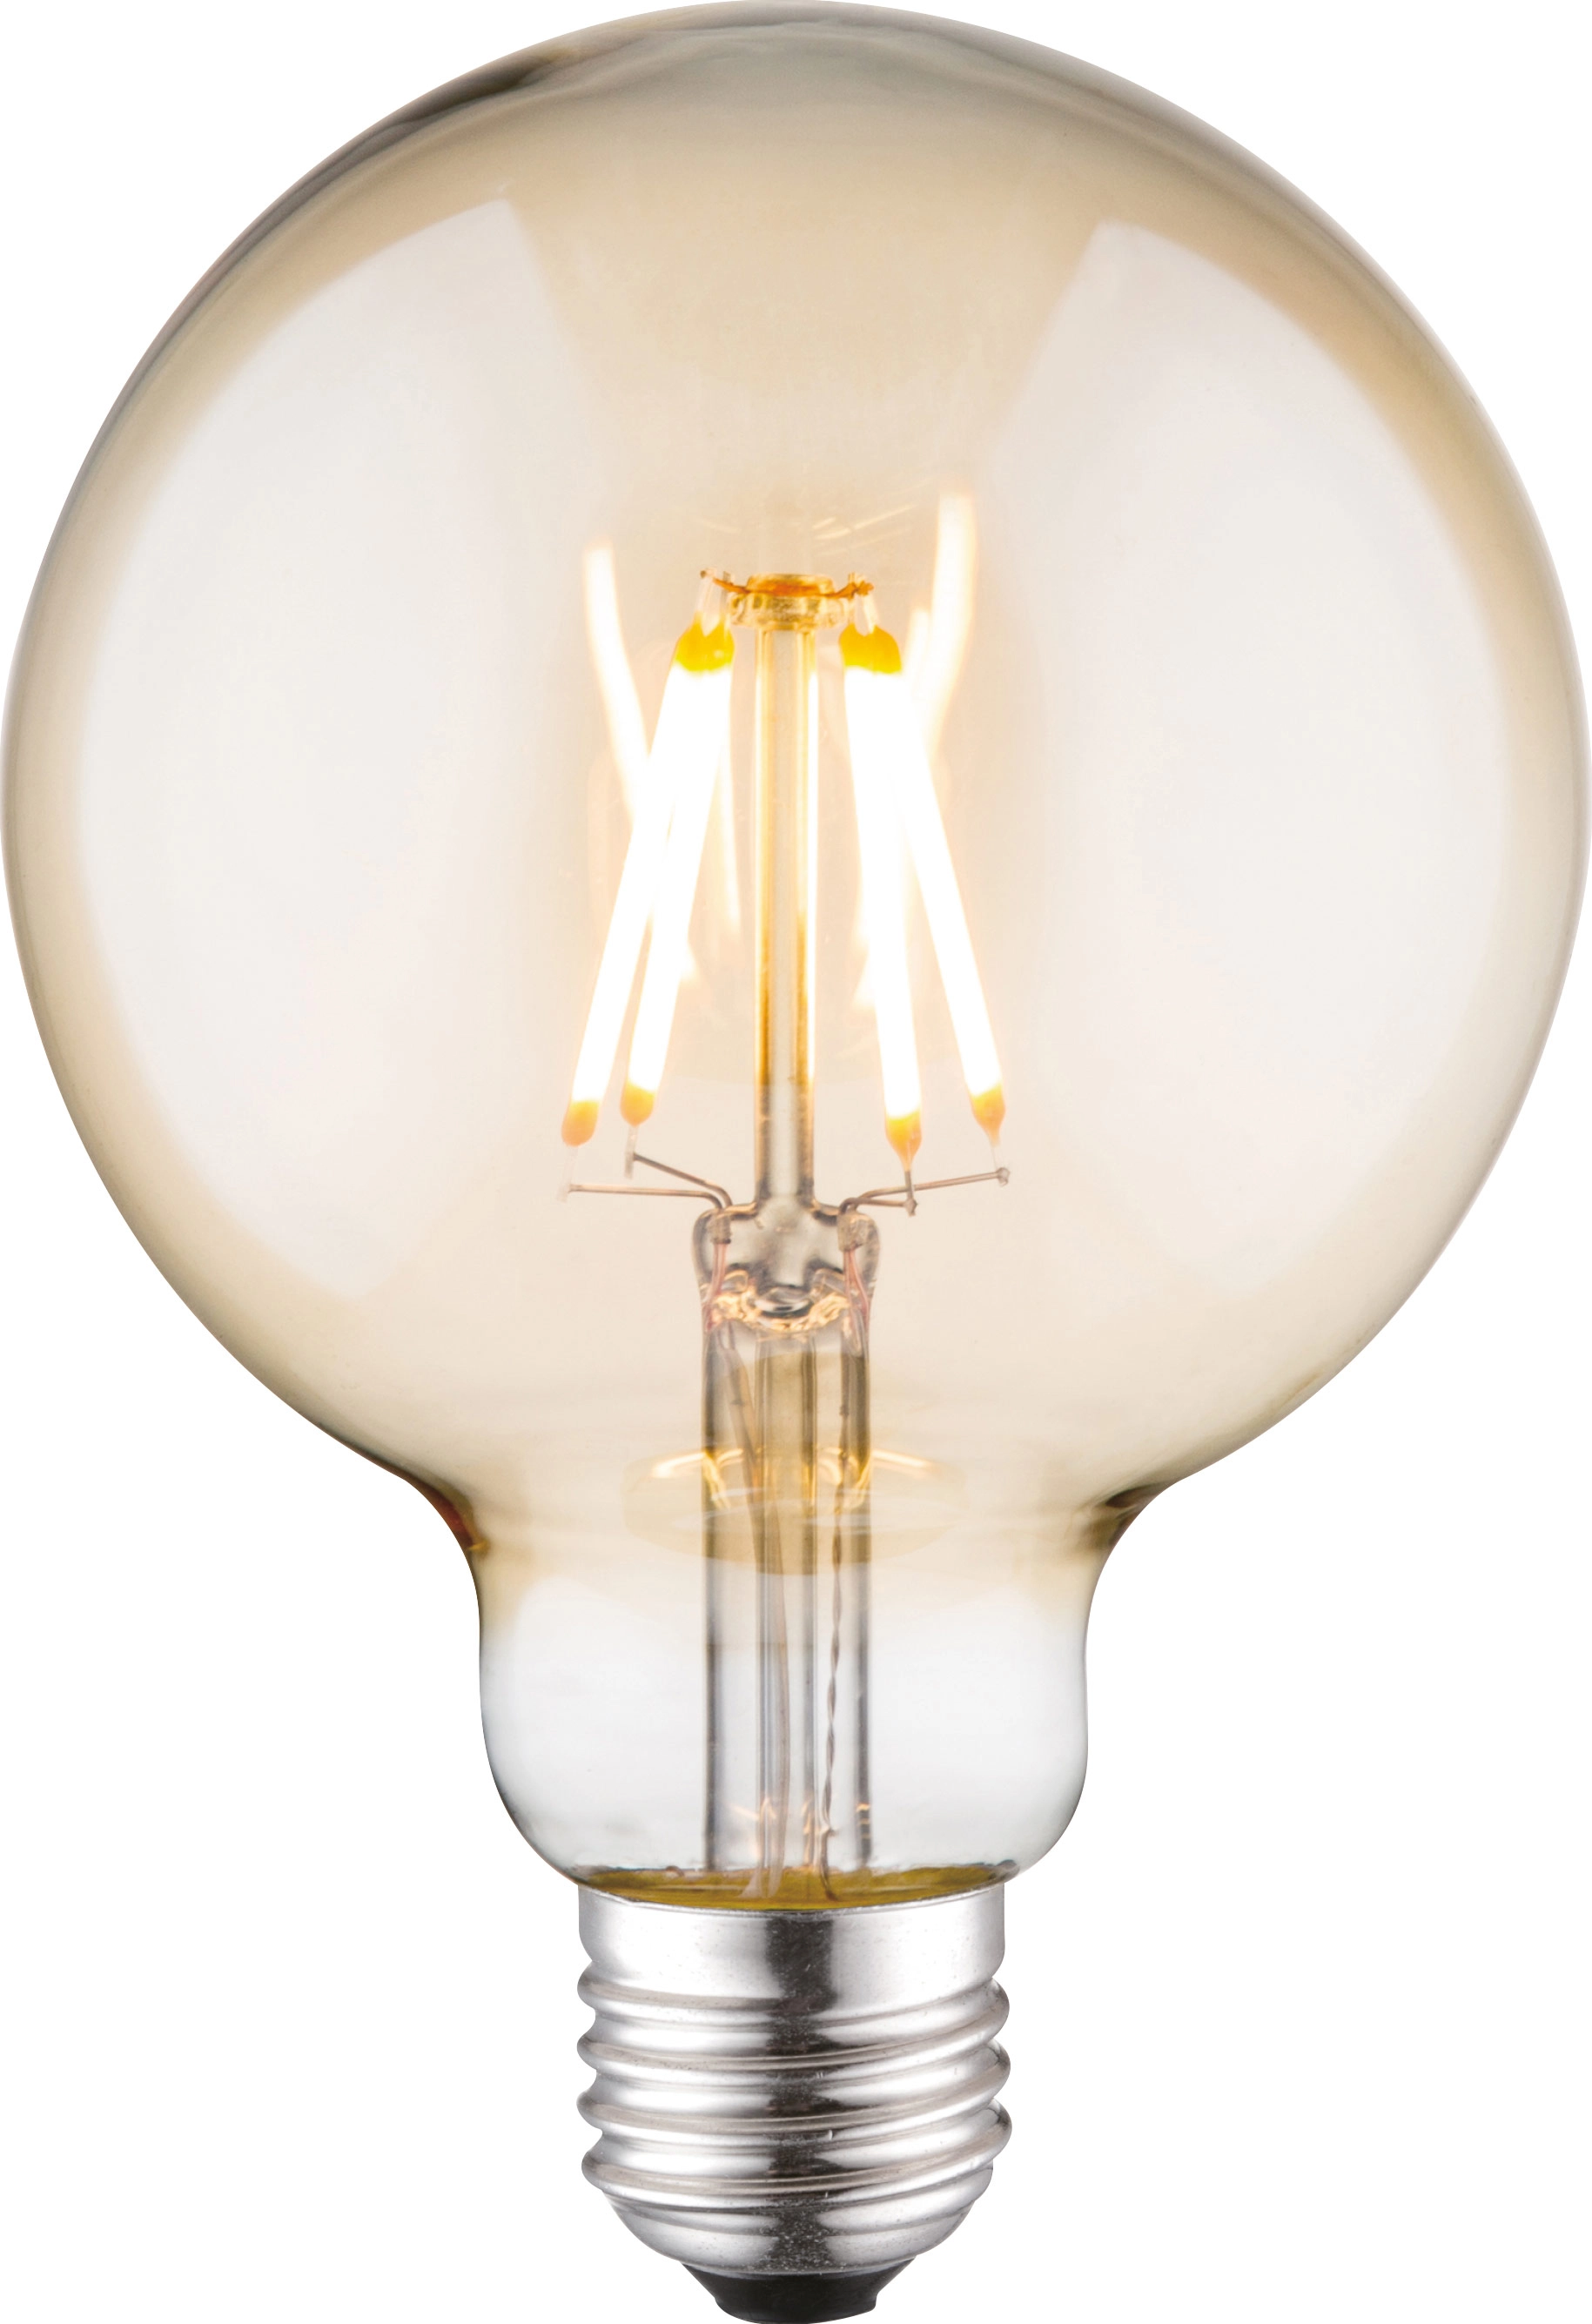 LAMPE LED CLASSIC 15W/1450LM/6500K/E27 - BMS ELECTRIC